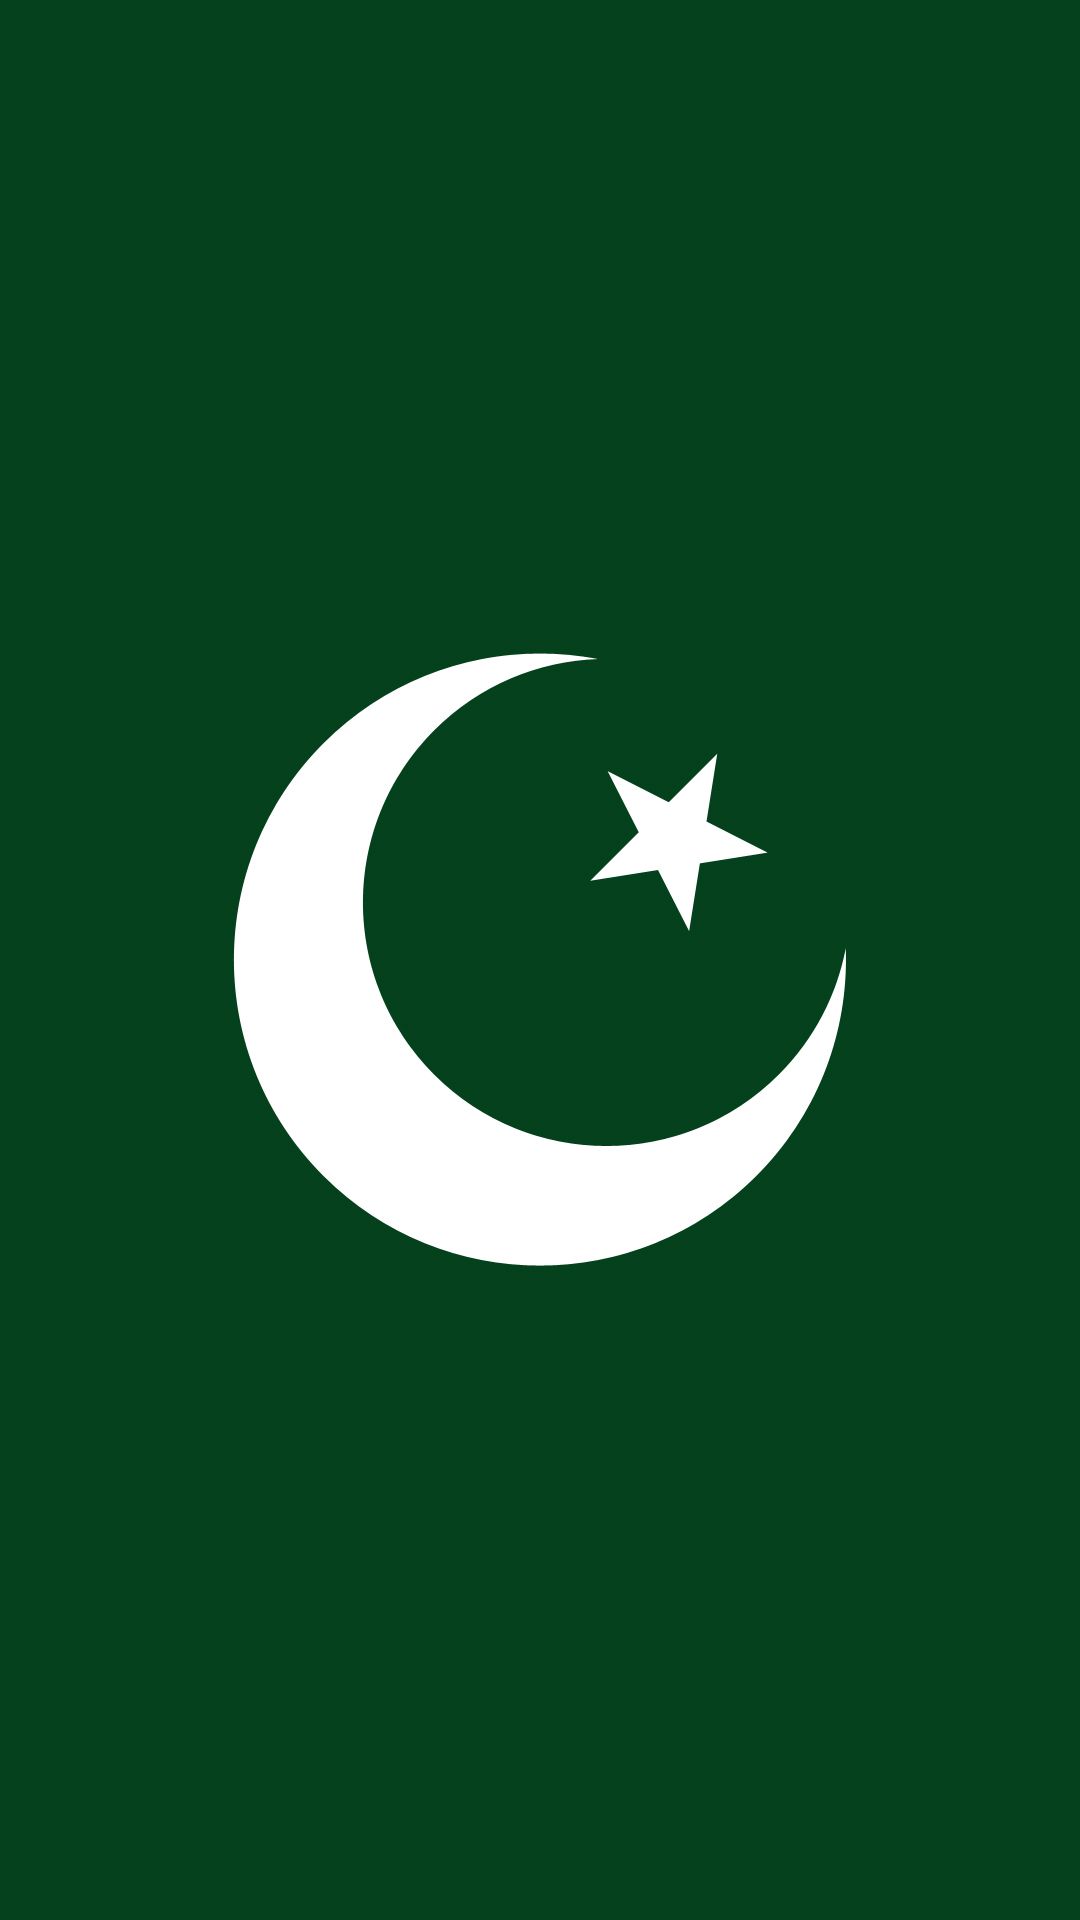 Pakistan Flag Mobile wallpaper